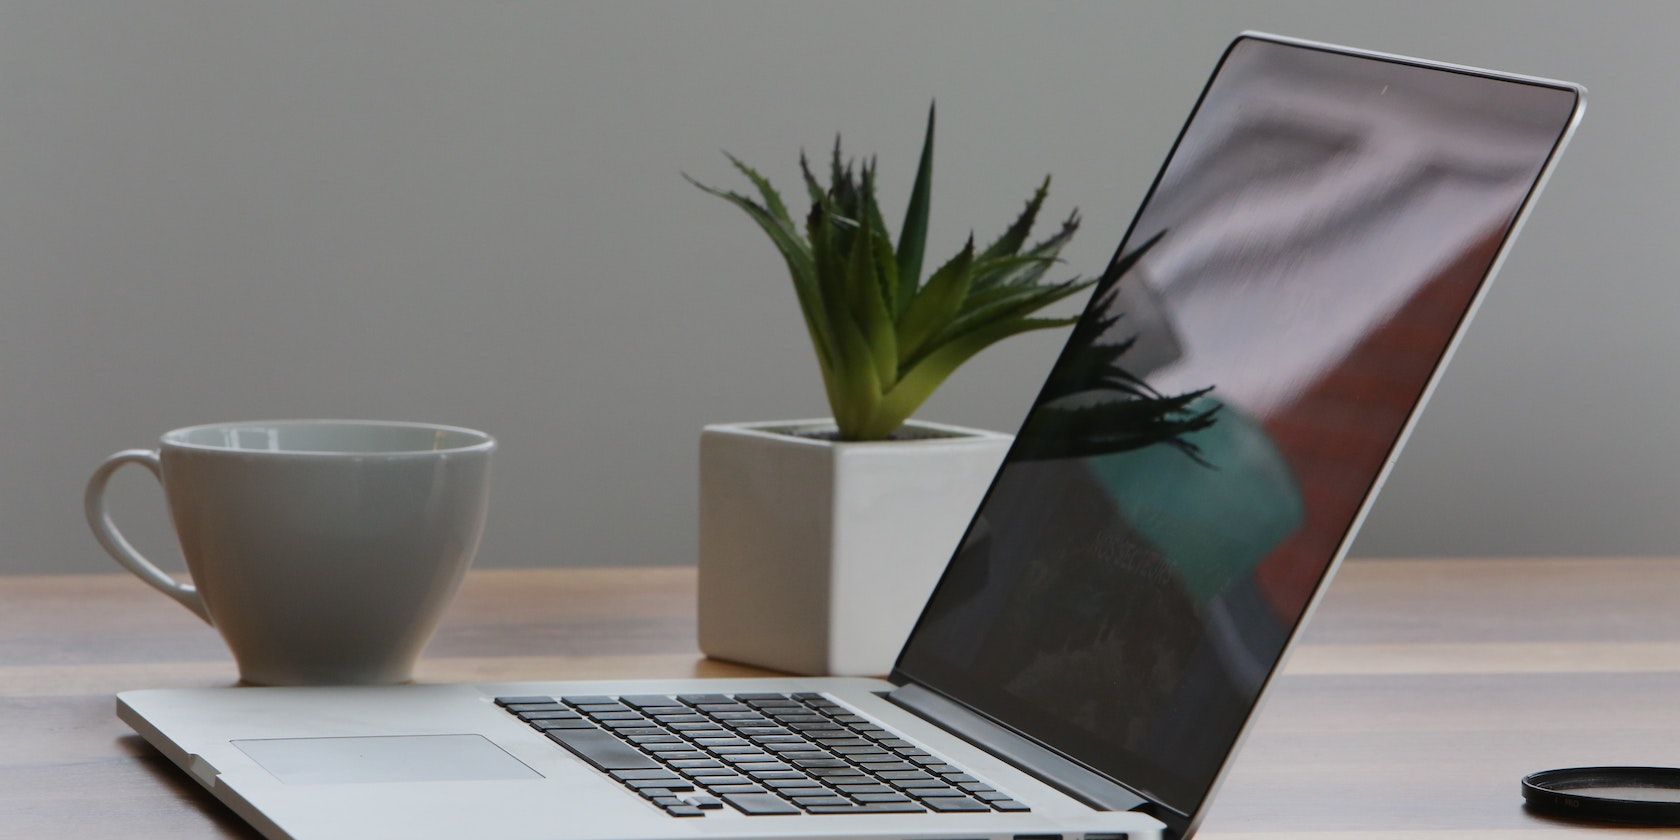 A MacBook sits on a table beside a plant and a mug